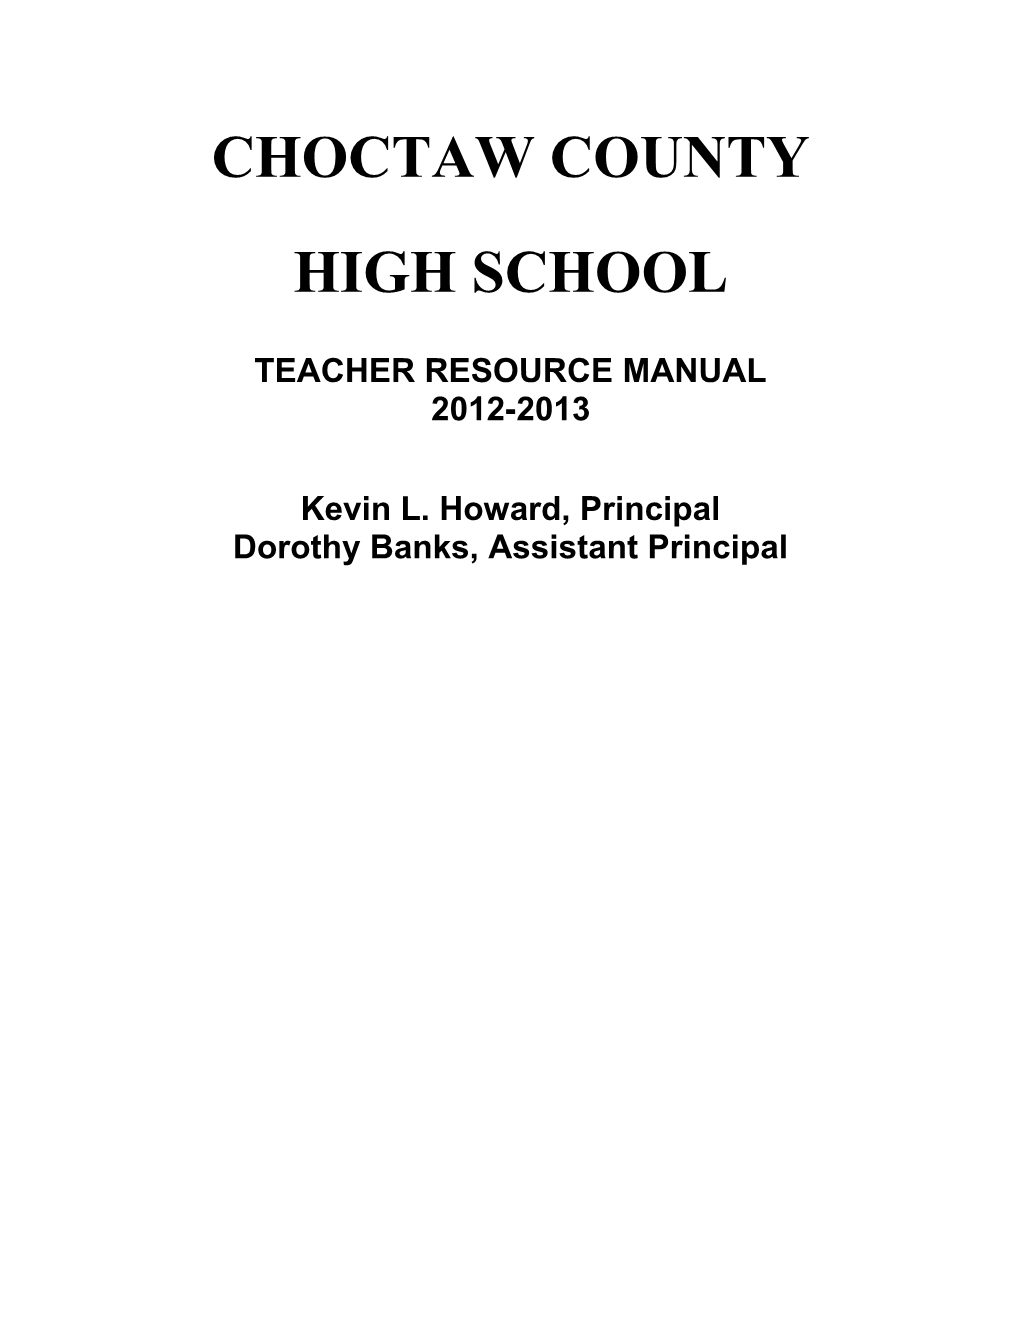 Teacher Resource Manual